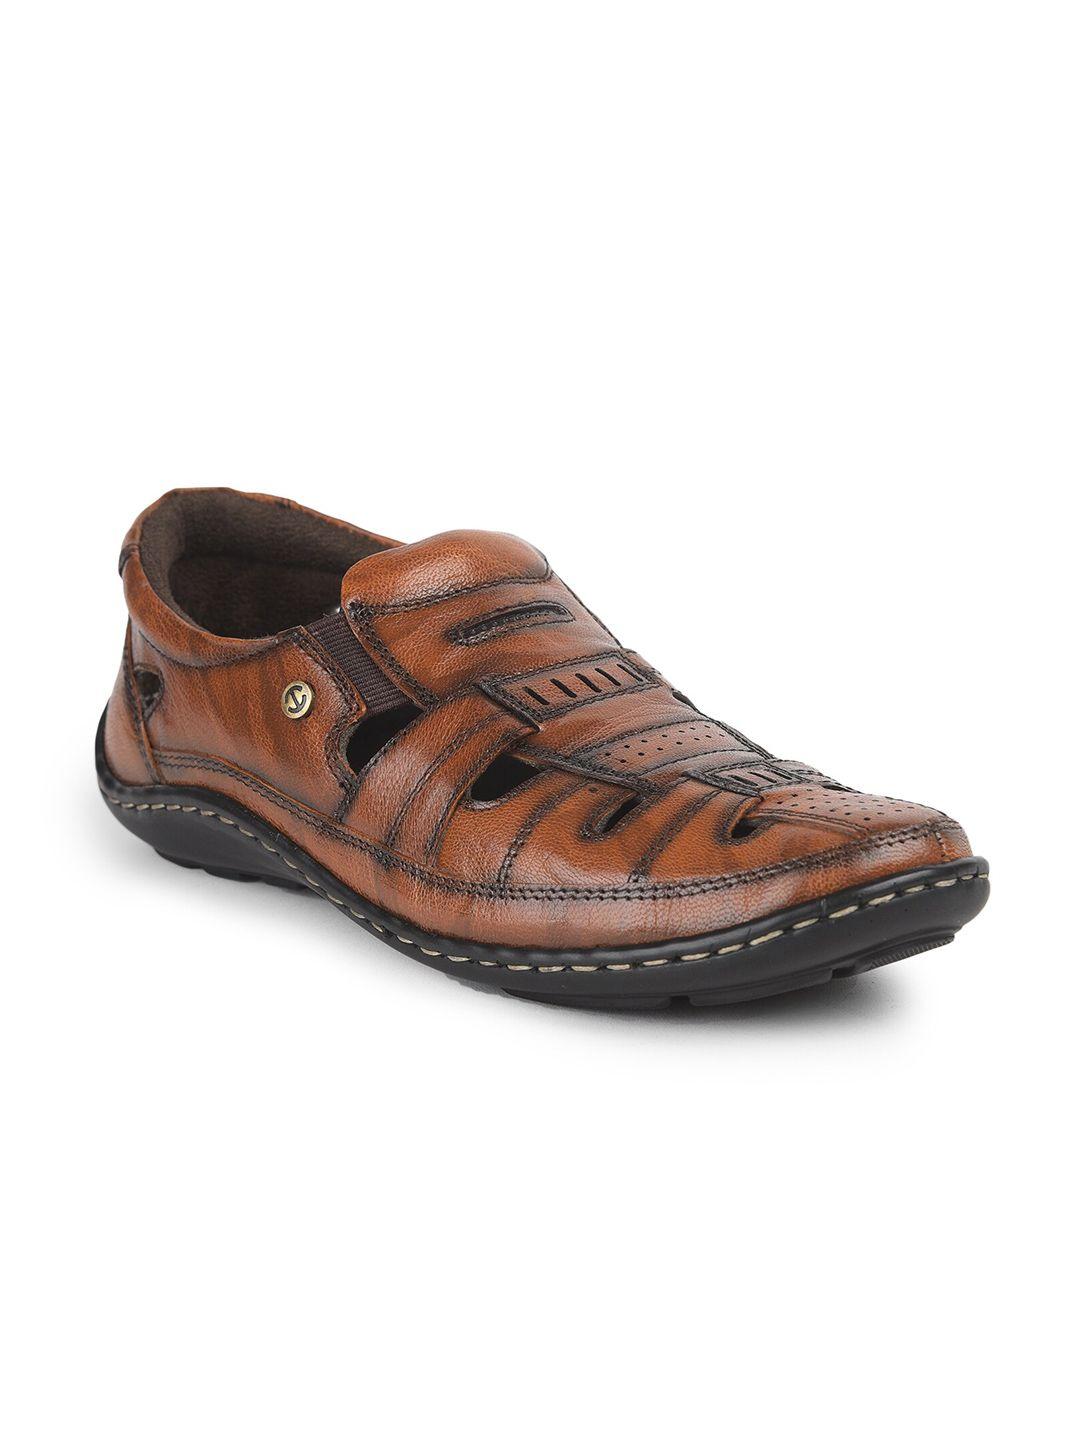 liberty men tan leather comfort sandals